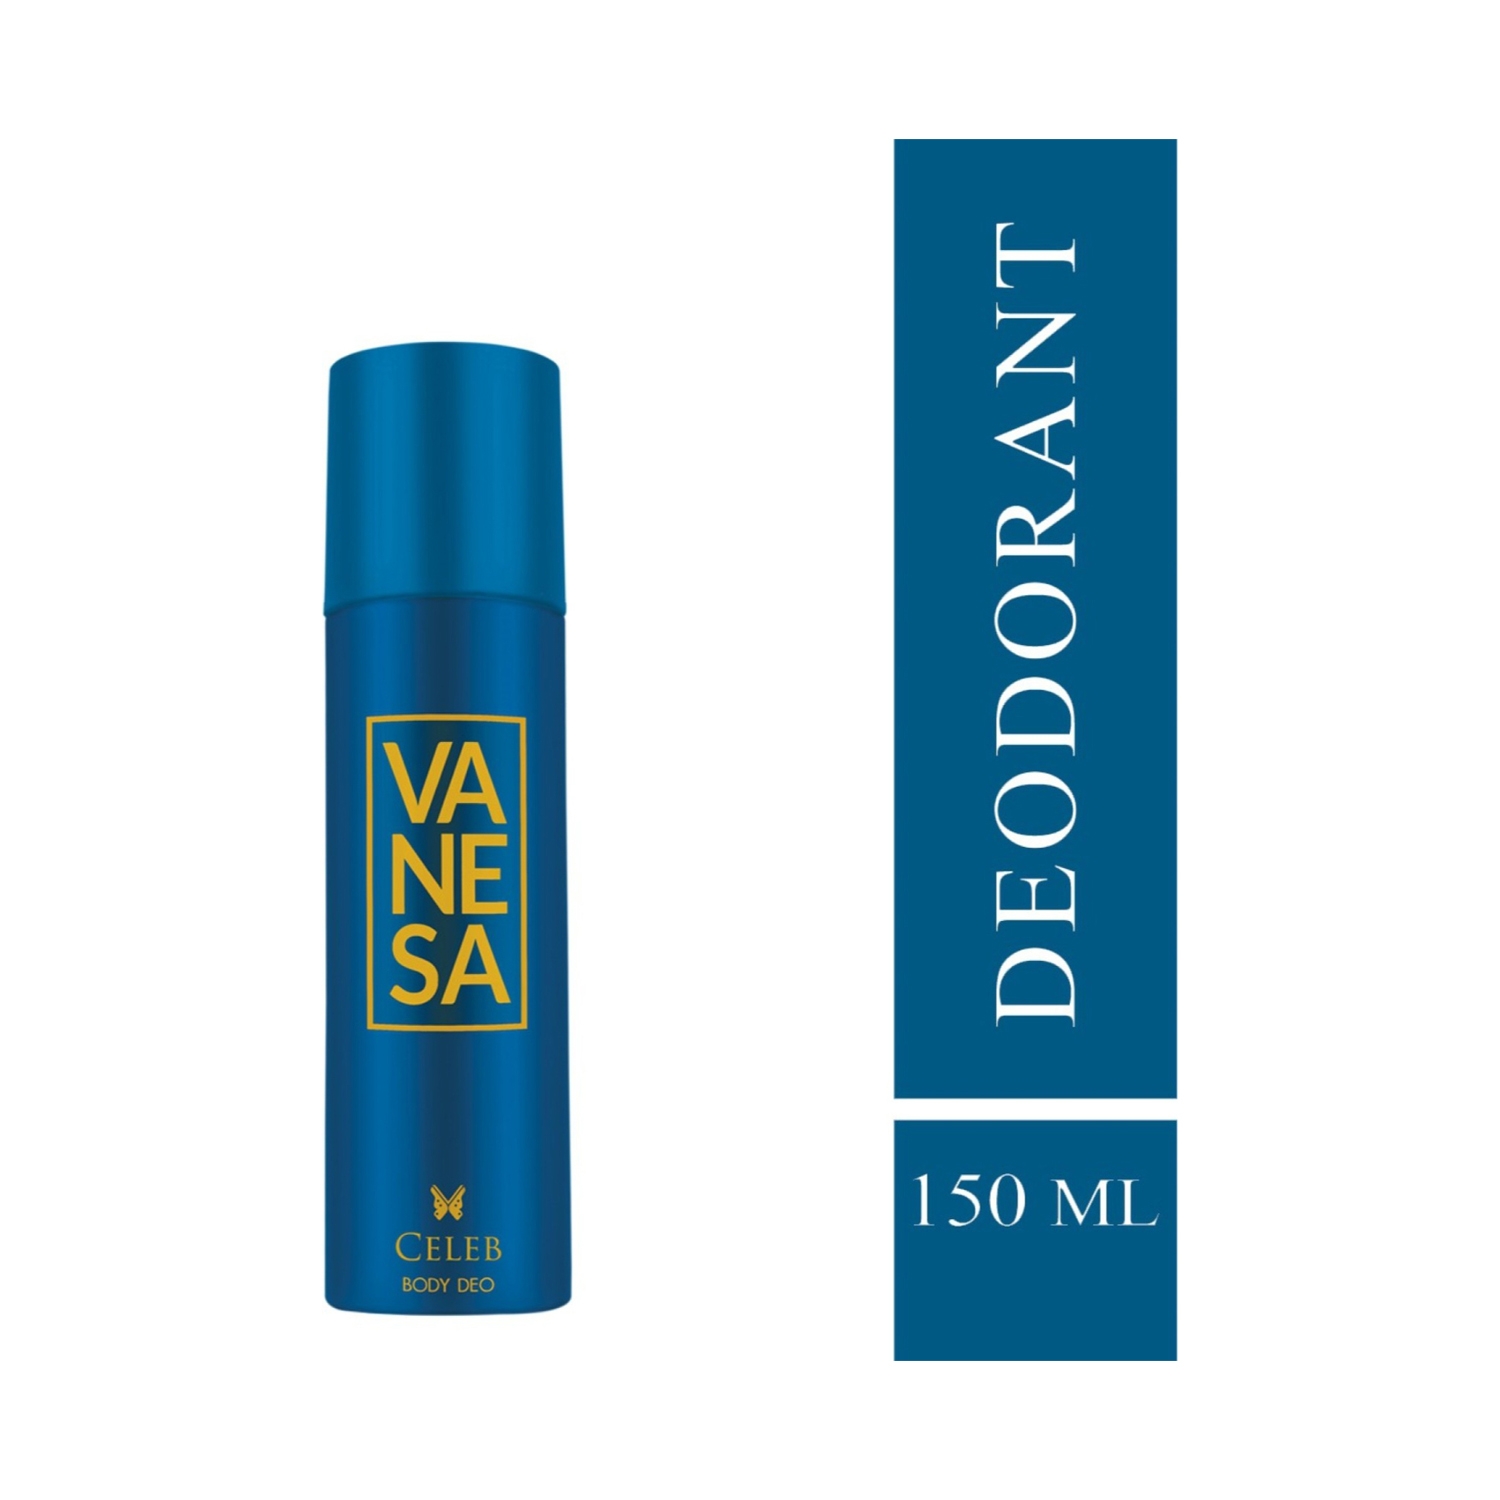 Vanesa Celeb Deodorant Body Spray (150ml)